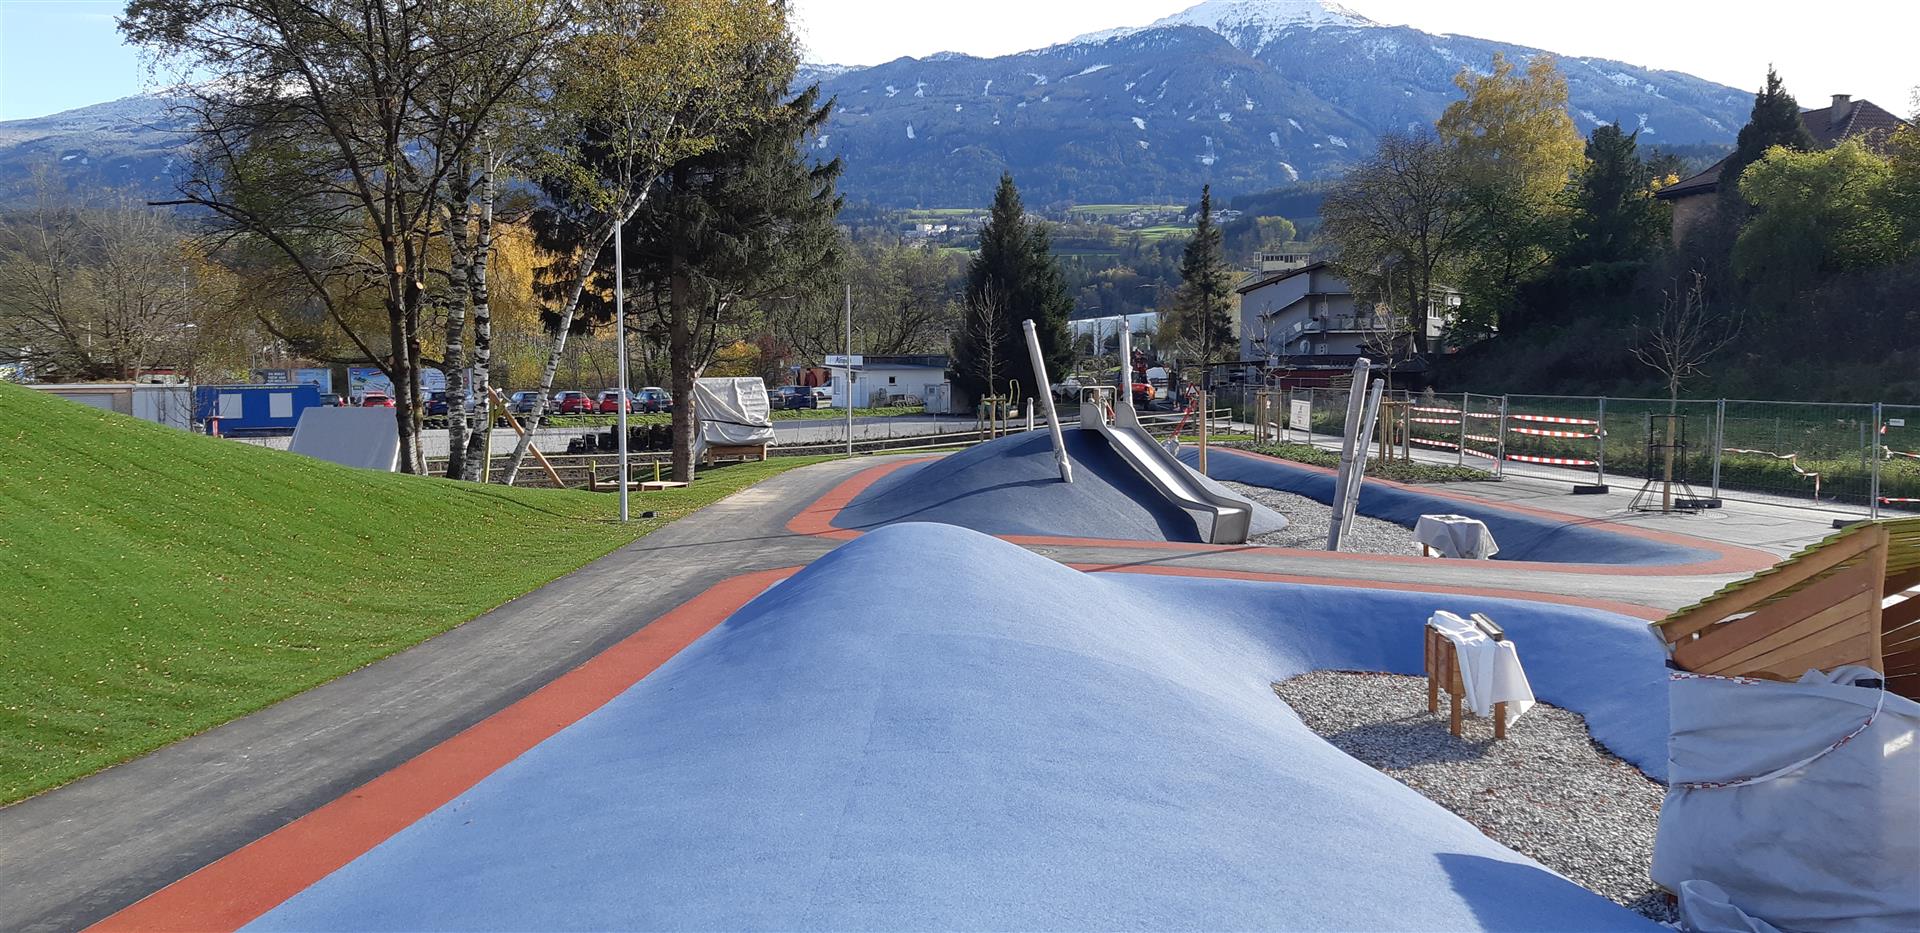 Freizeitpark, Innsbruck - Niskogradnja